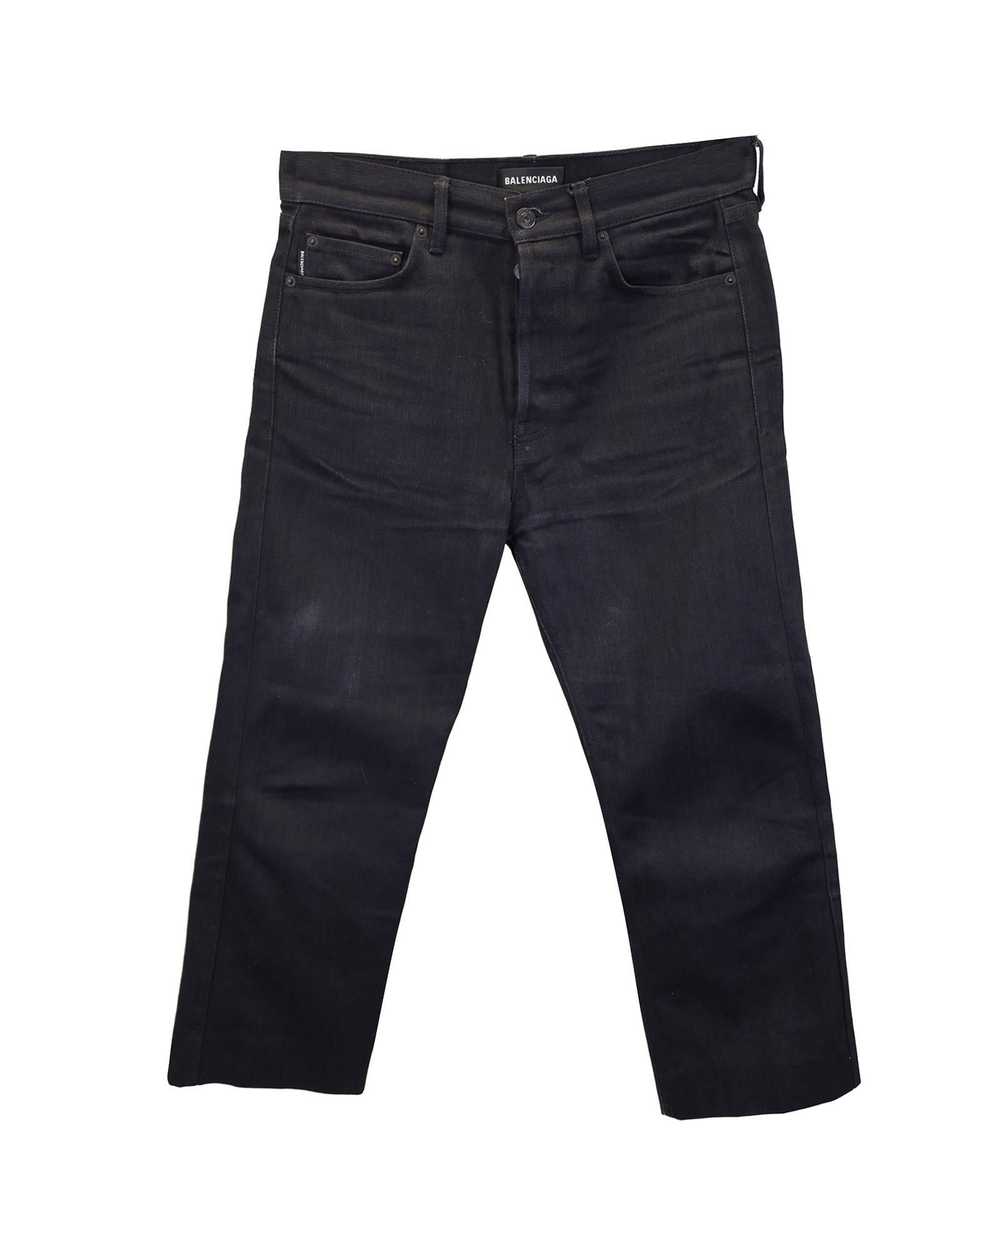 Balenciaga Mid-Waist Black Cotton Skinny Jeans - image 1